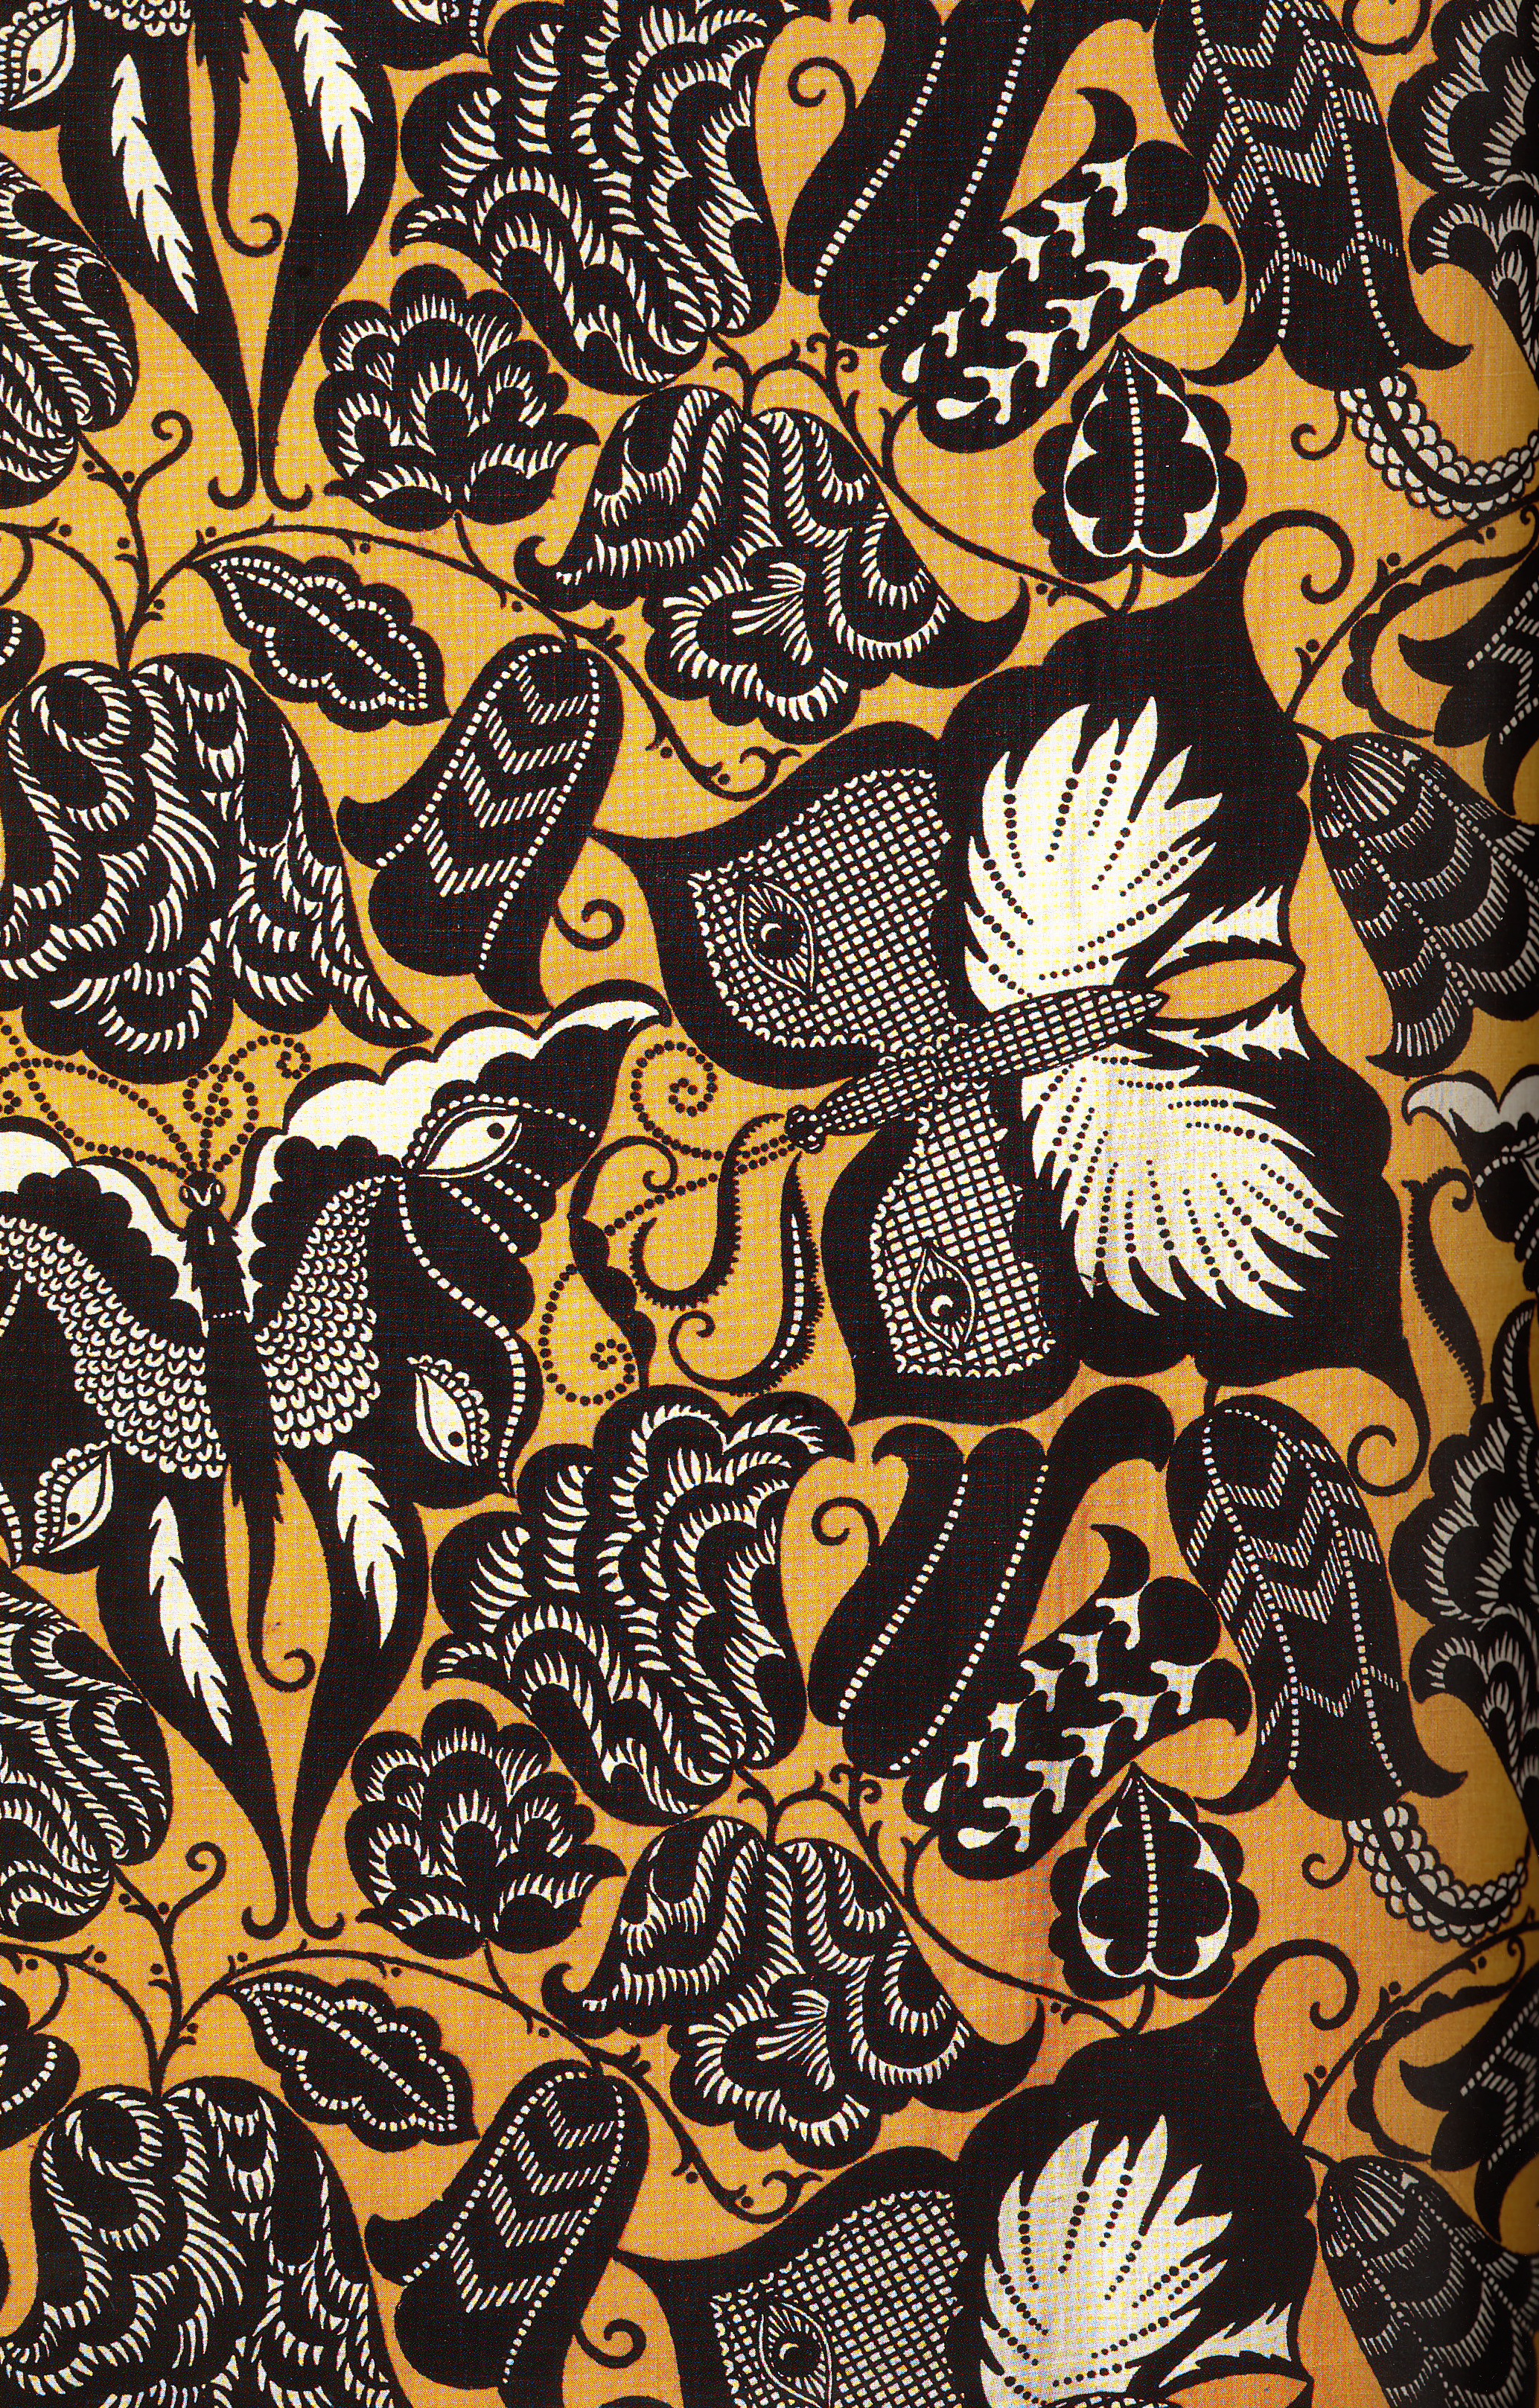 Dagobert Peche—Schwalbenschwantz, fabric, 1911/13